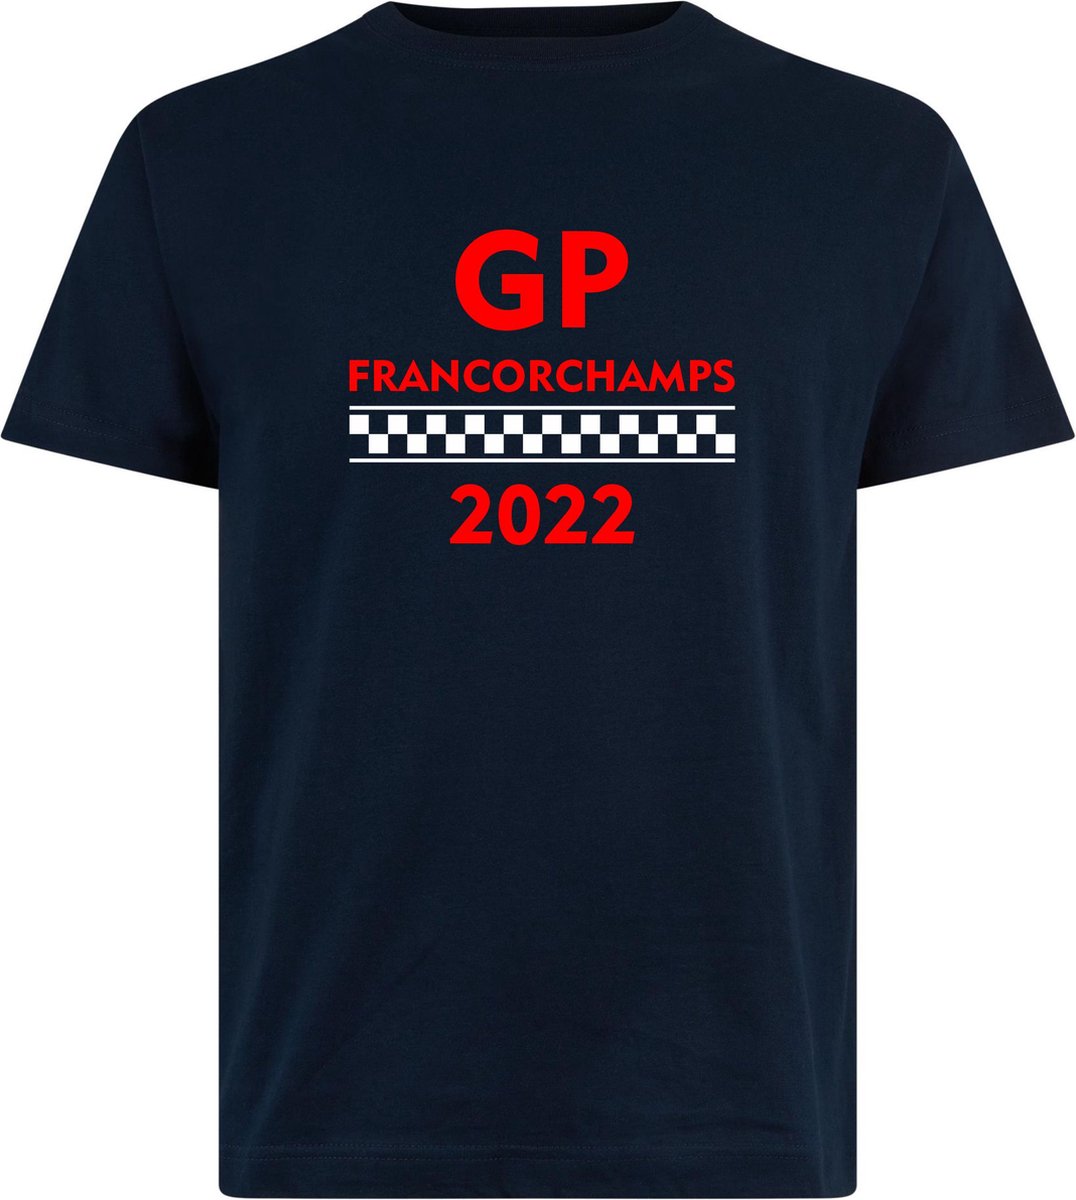 T-shirt kinderen GP Francorchamps 2022 | Max Verstappen / Red Bull Racing / Formule 1 fan | Grand Prix Circuit Spa-Francorchamps | kleding shirt | Navy | maat 140